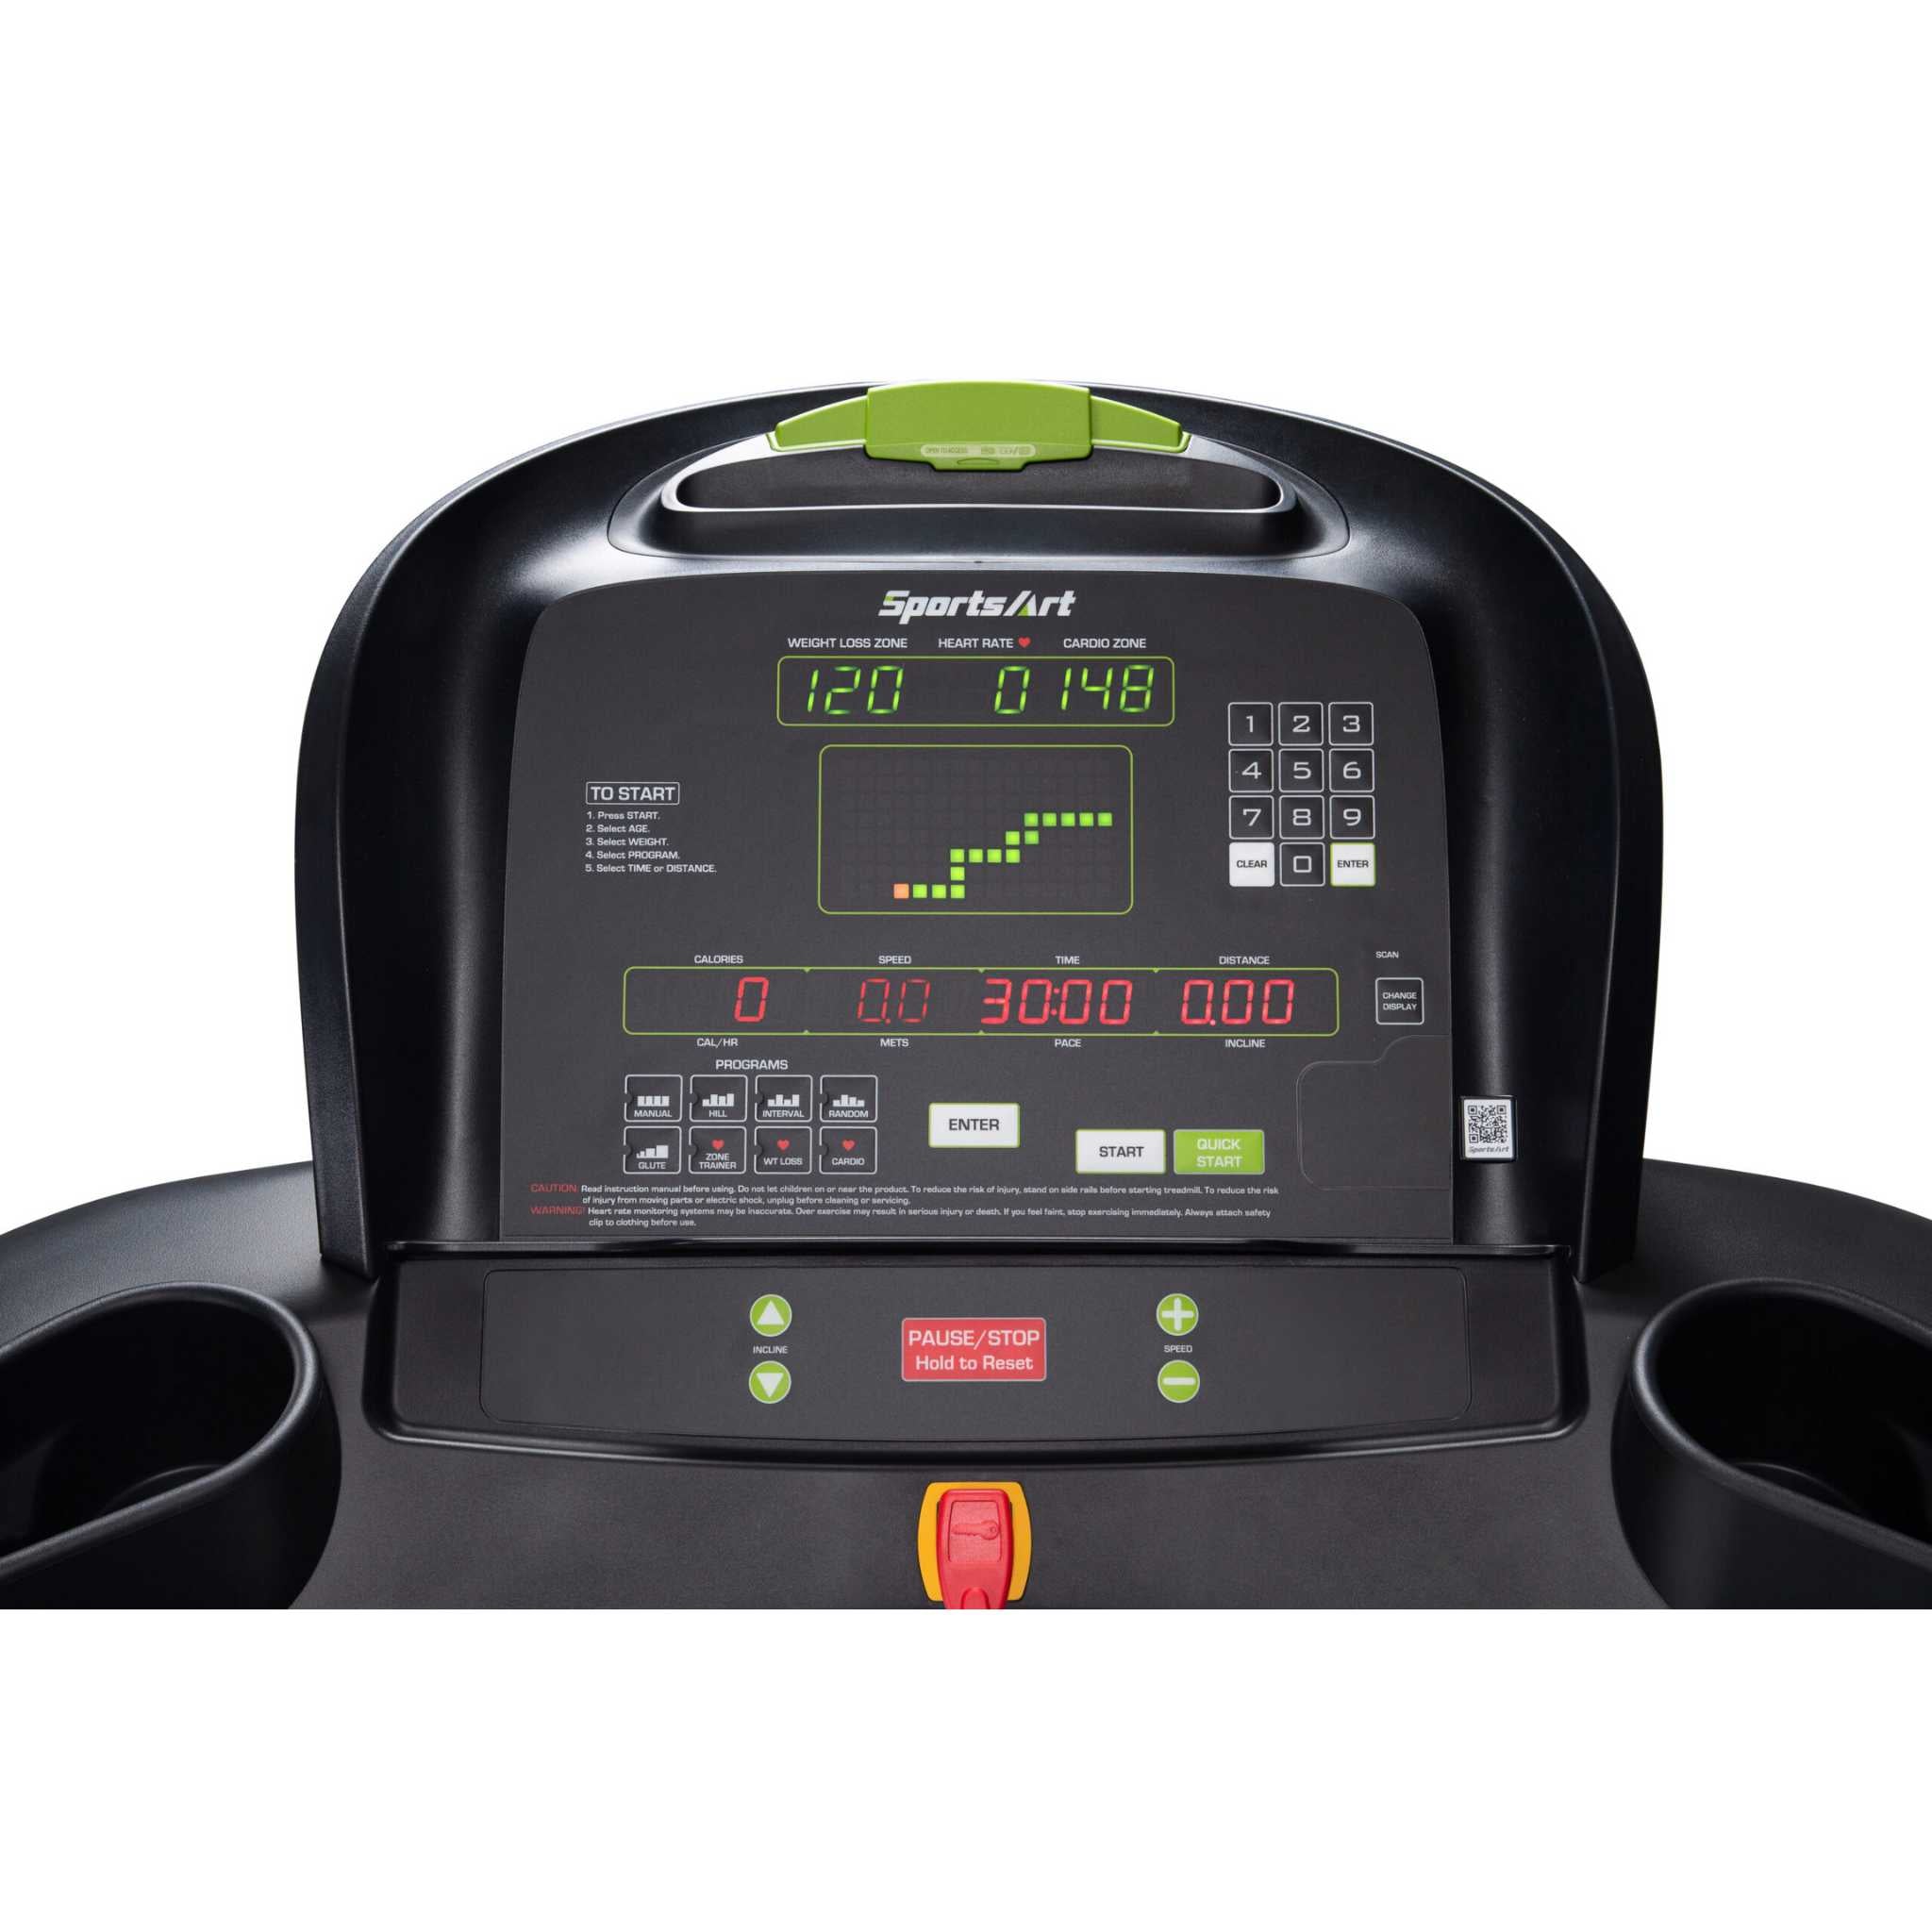 SportsArt T615M Rehabilitation Treadmill Console